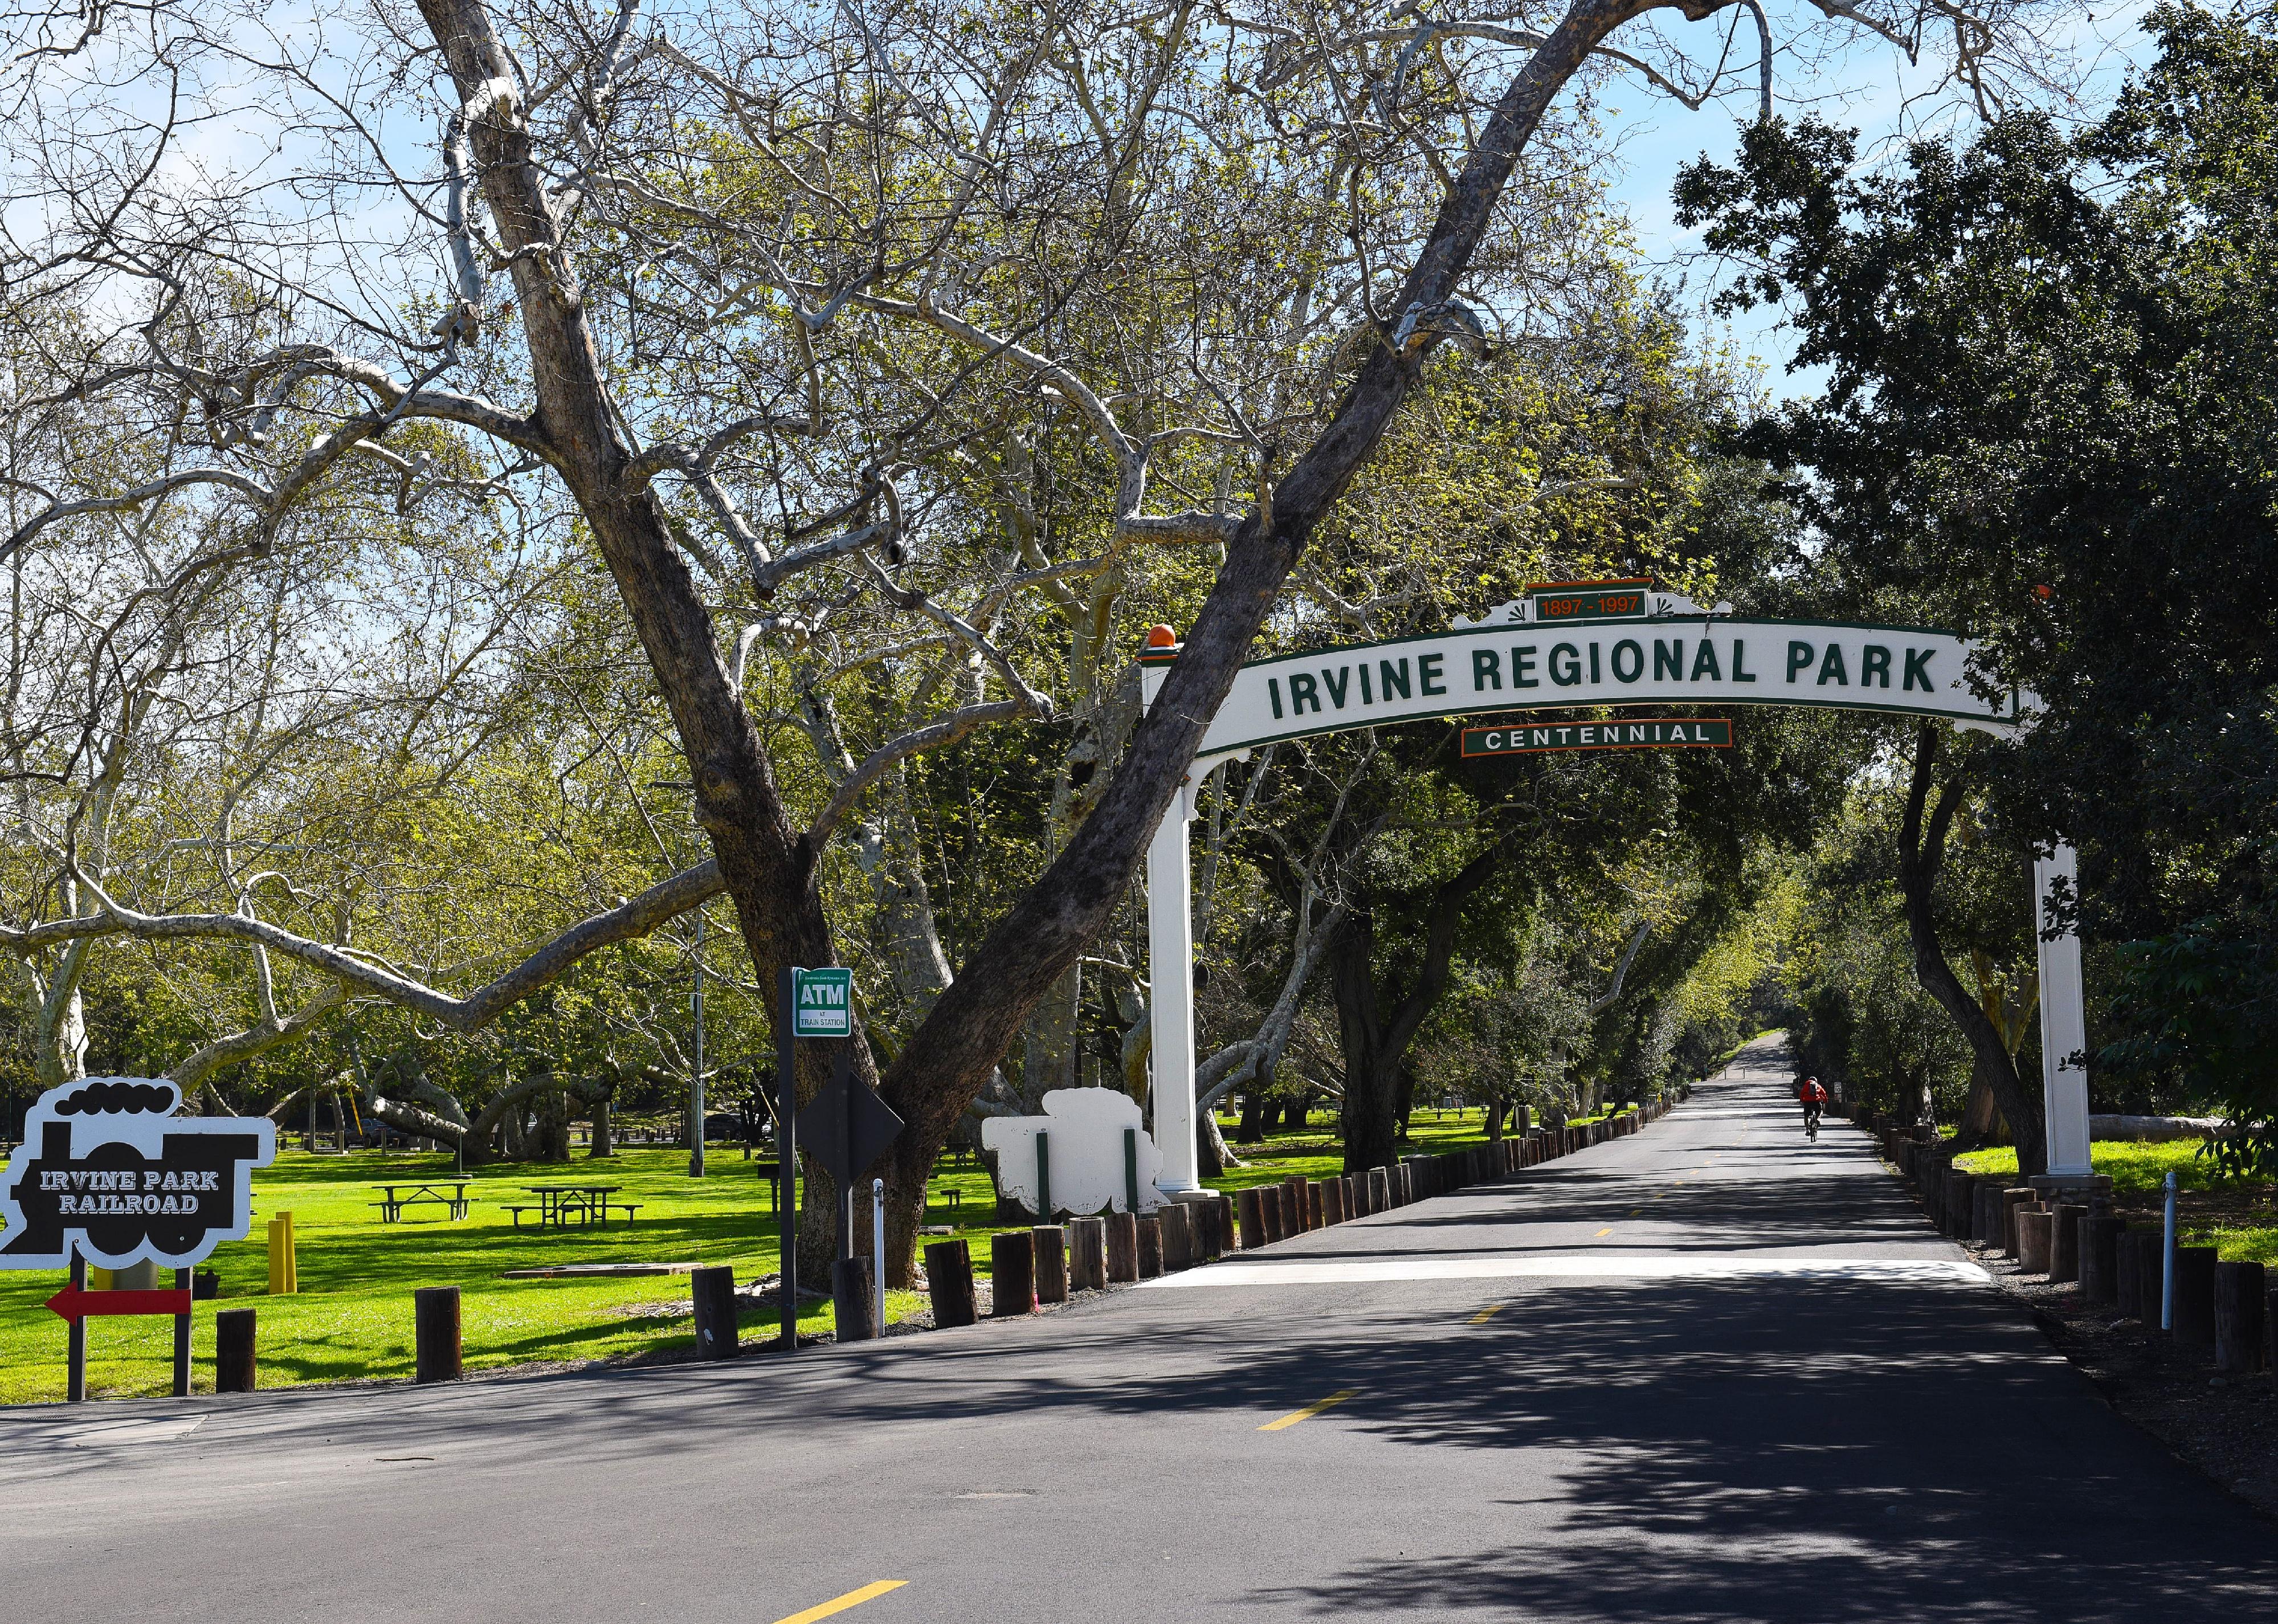 Irvine Regional Park Centennial sign.